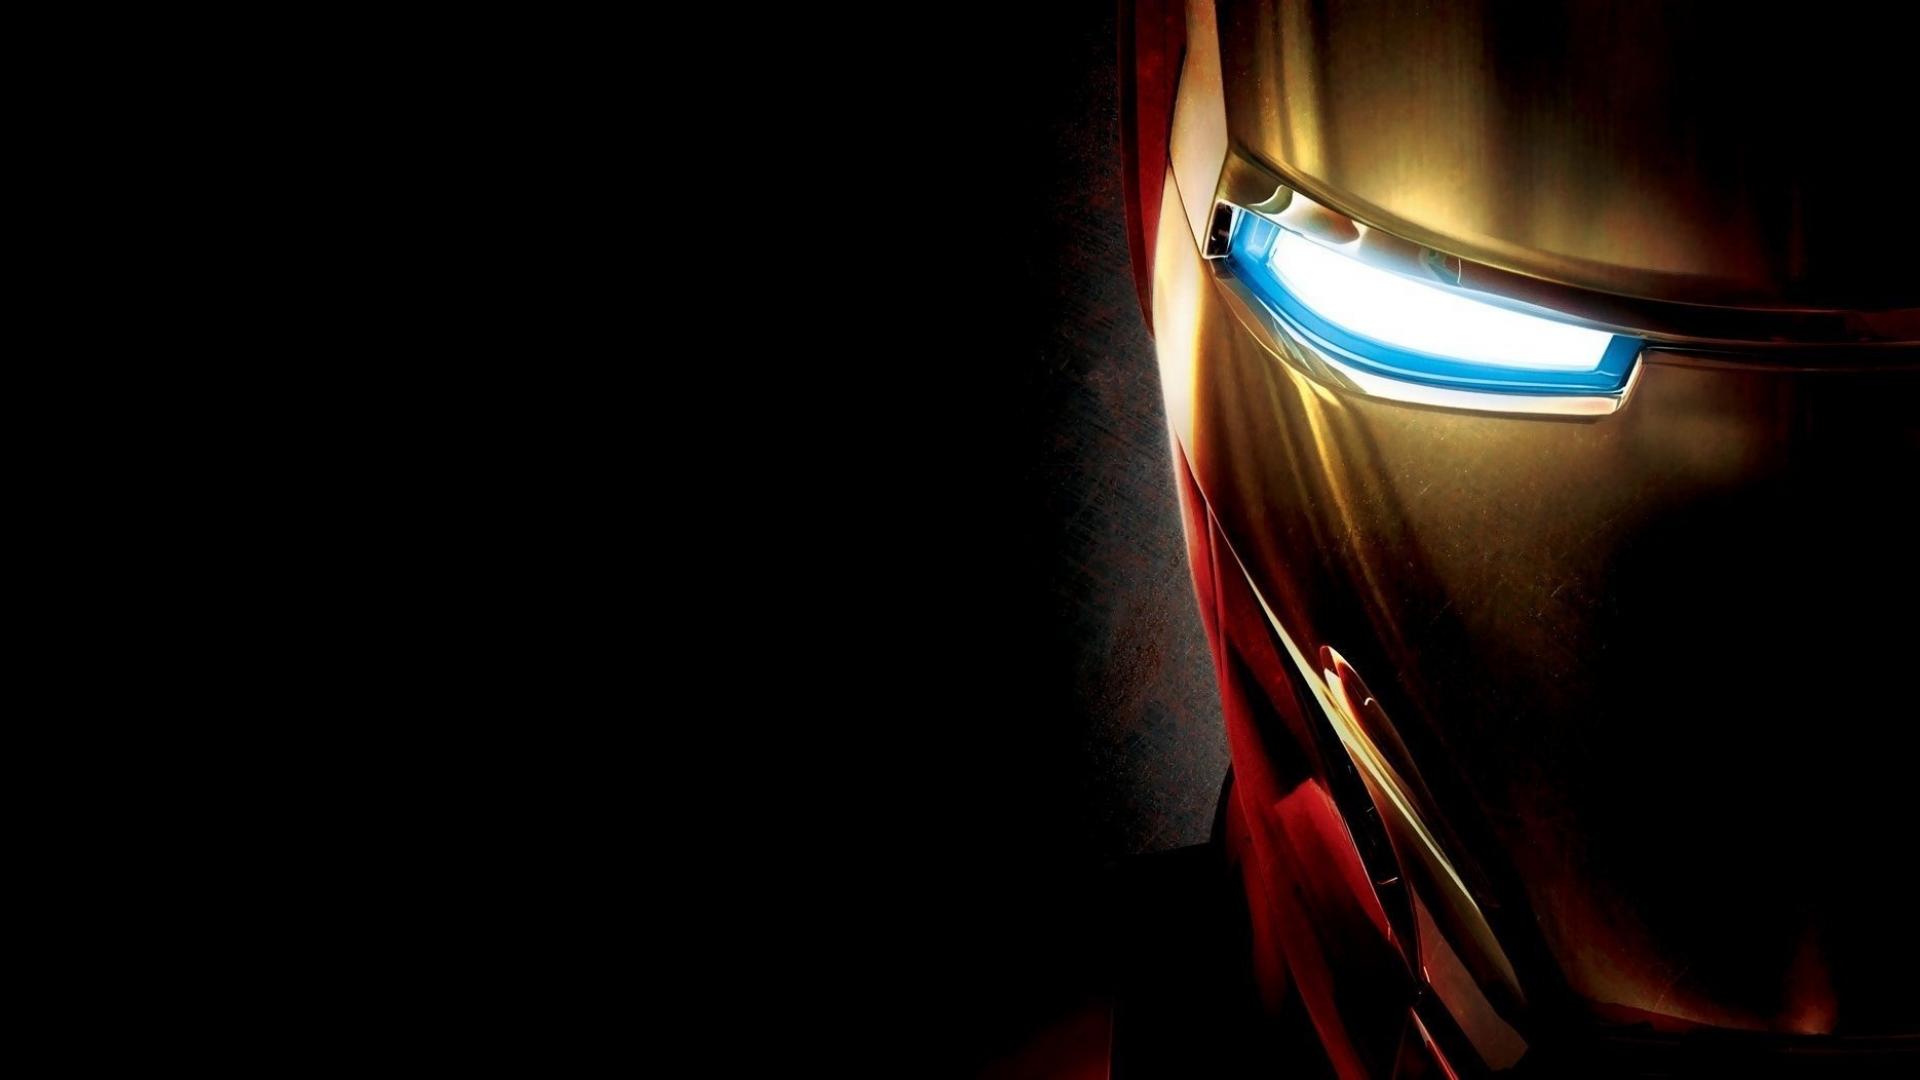 Iron Man simple Face Full HD Desktop Wallpapers 1080p 1920x1080